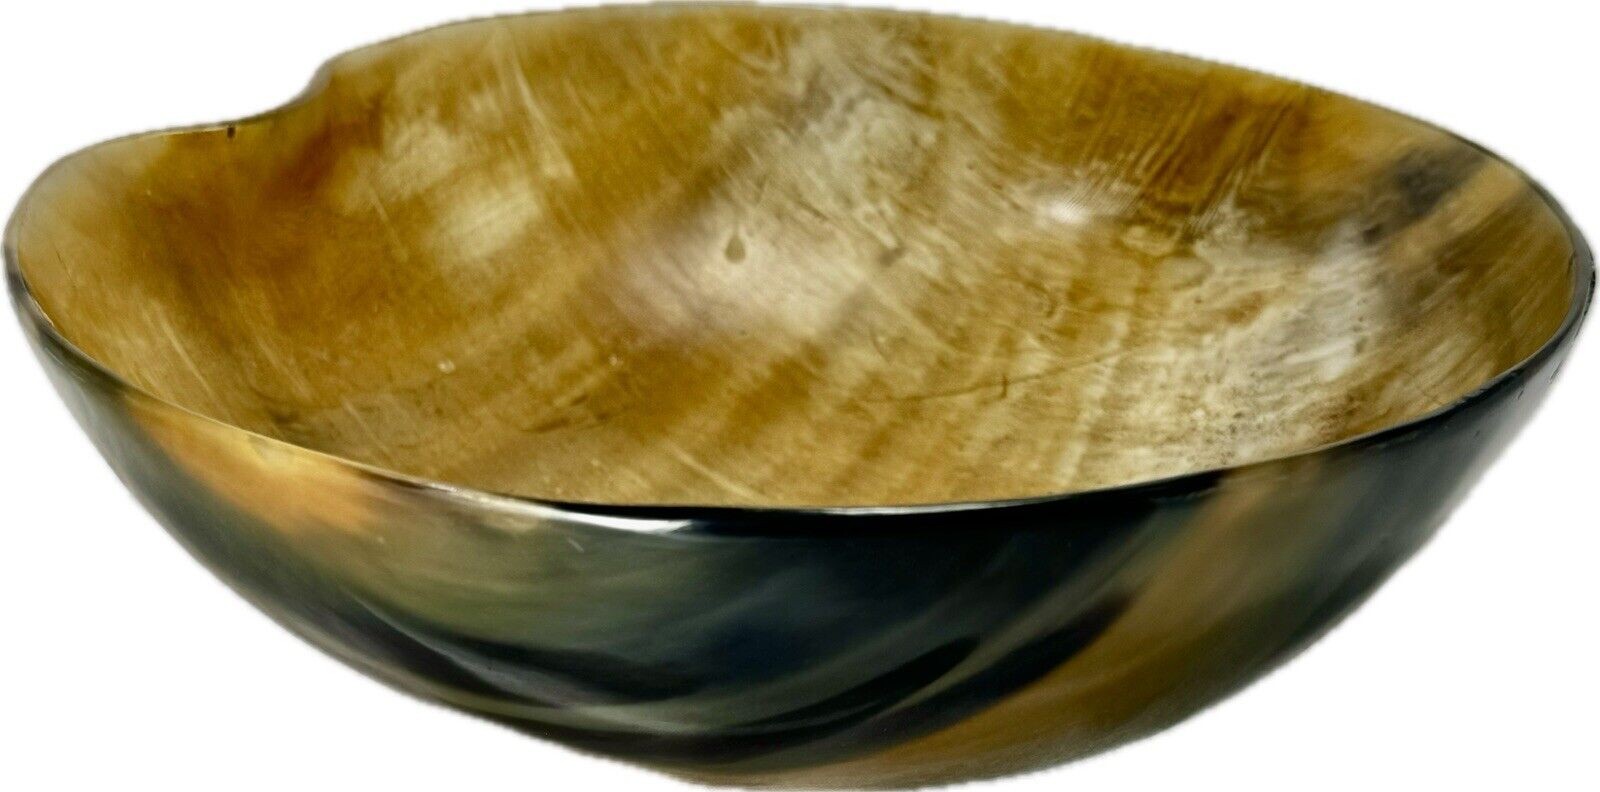 Vintage Horn Bowl 8” MCM Decor Gold and Browns